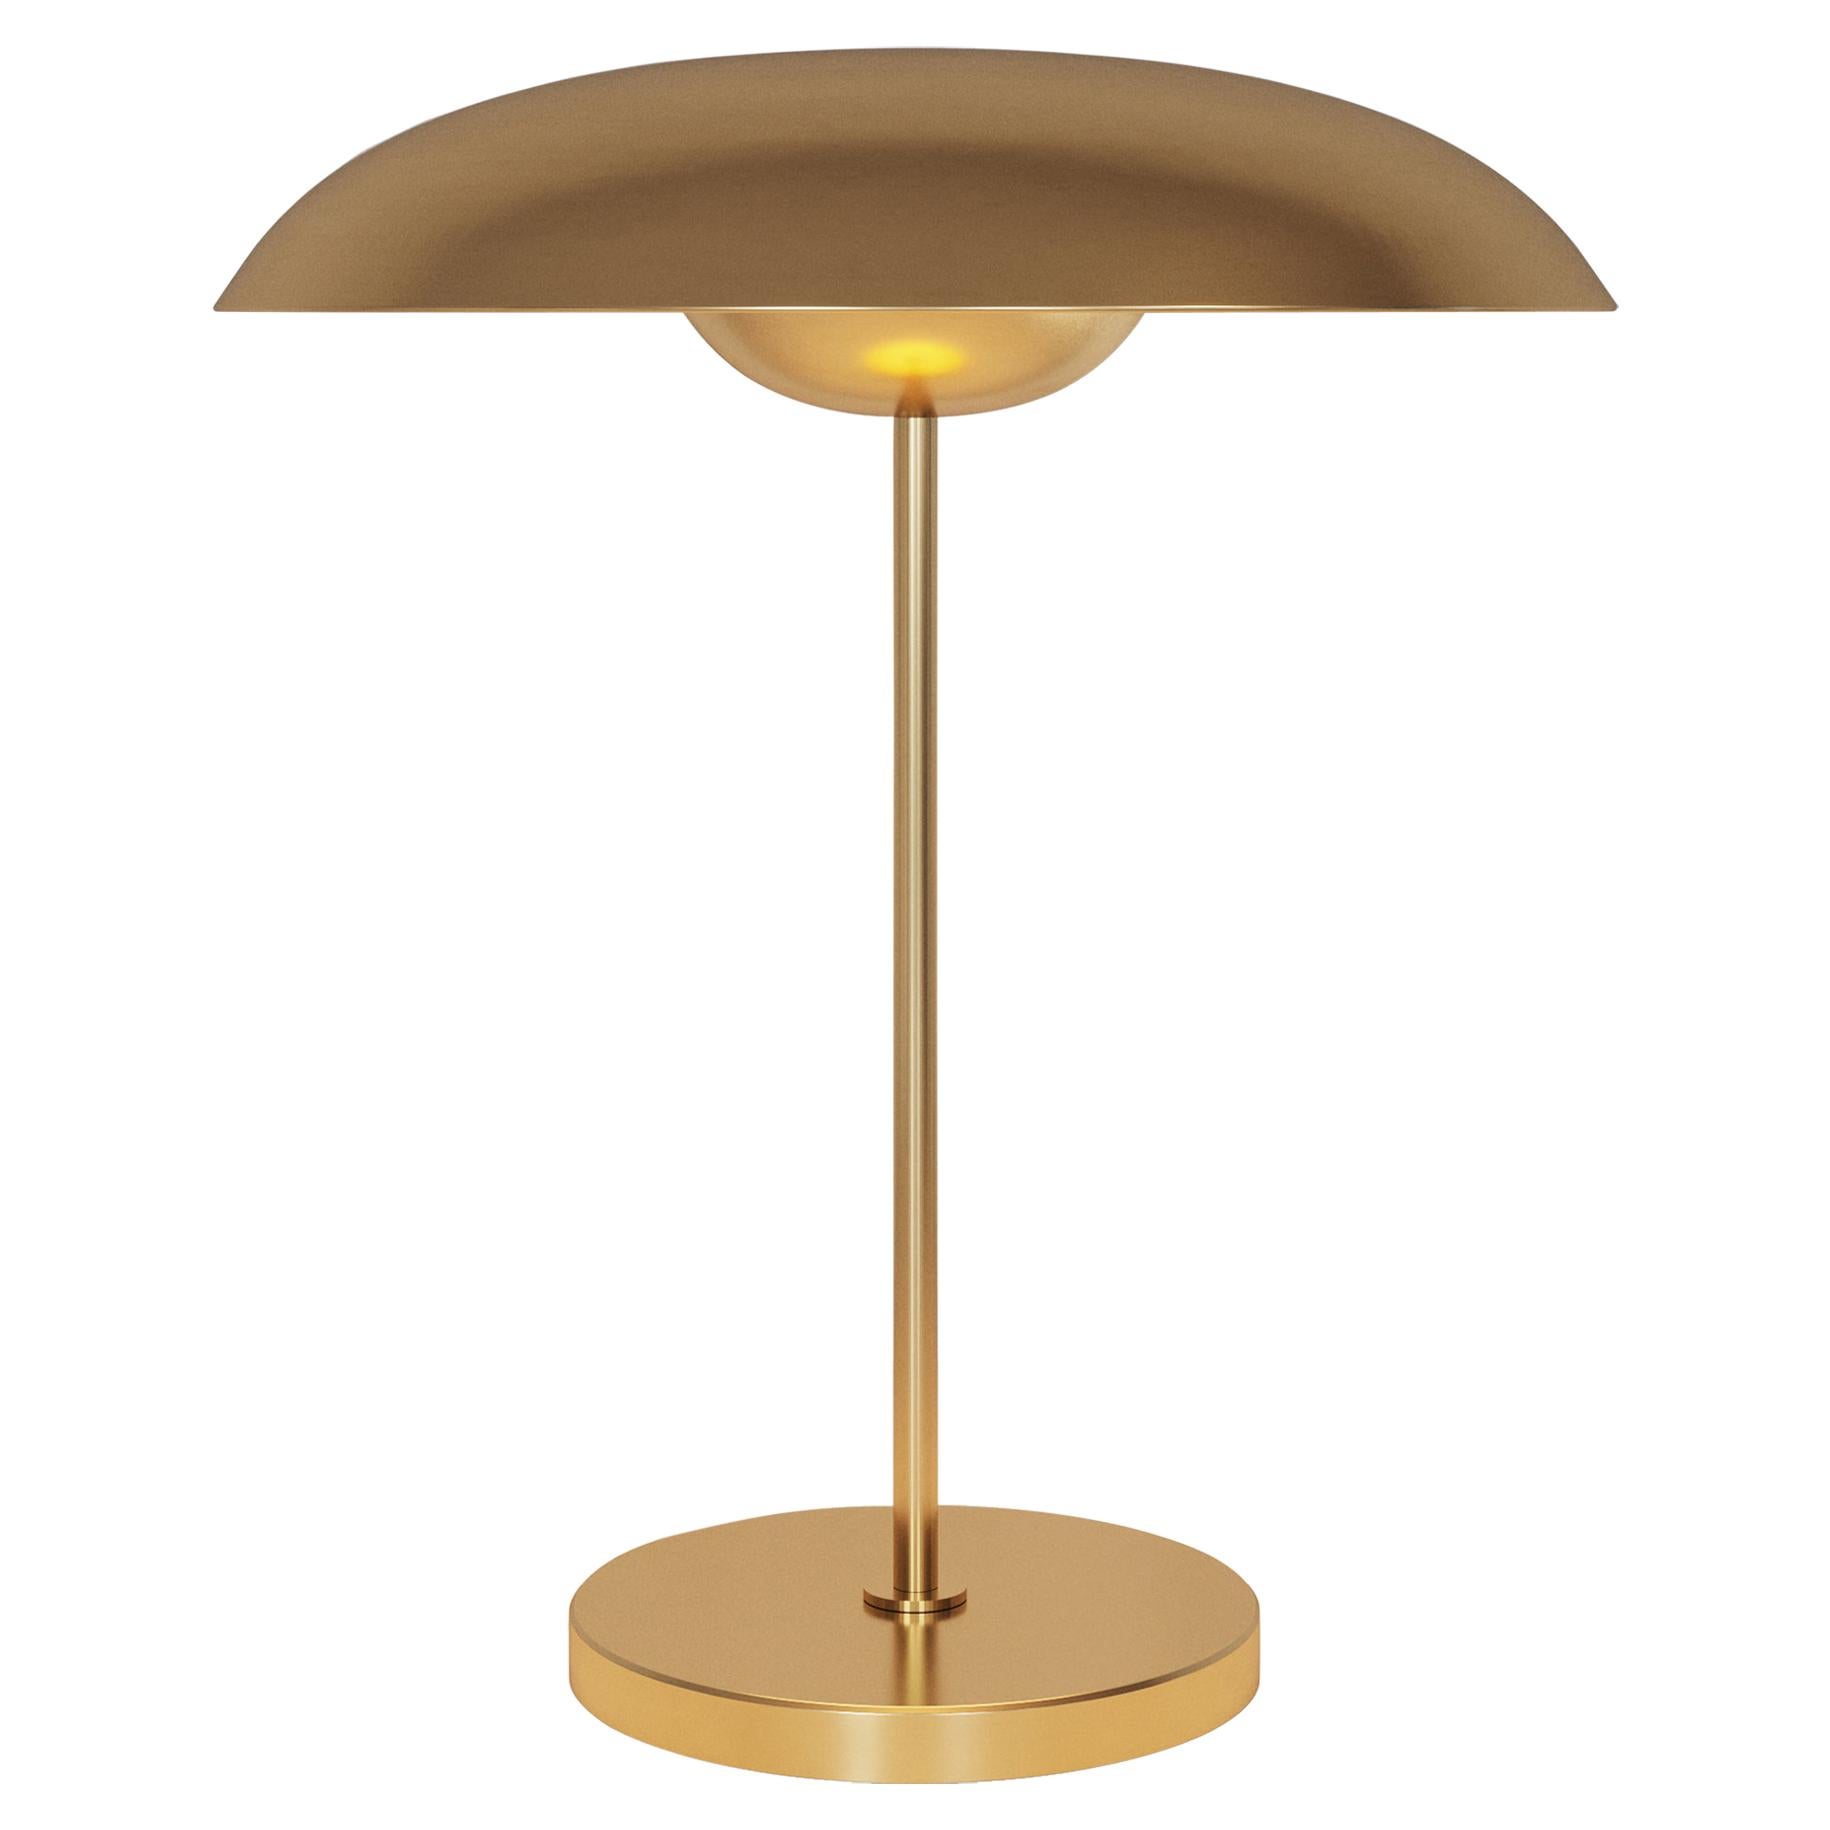 'Cosmic Solstice Aurum' Table Lamp, Handmade High Polished Brass Table Light